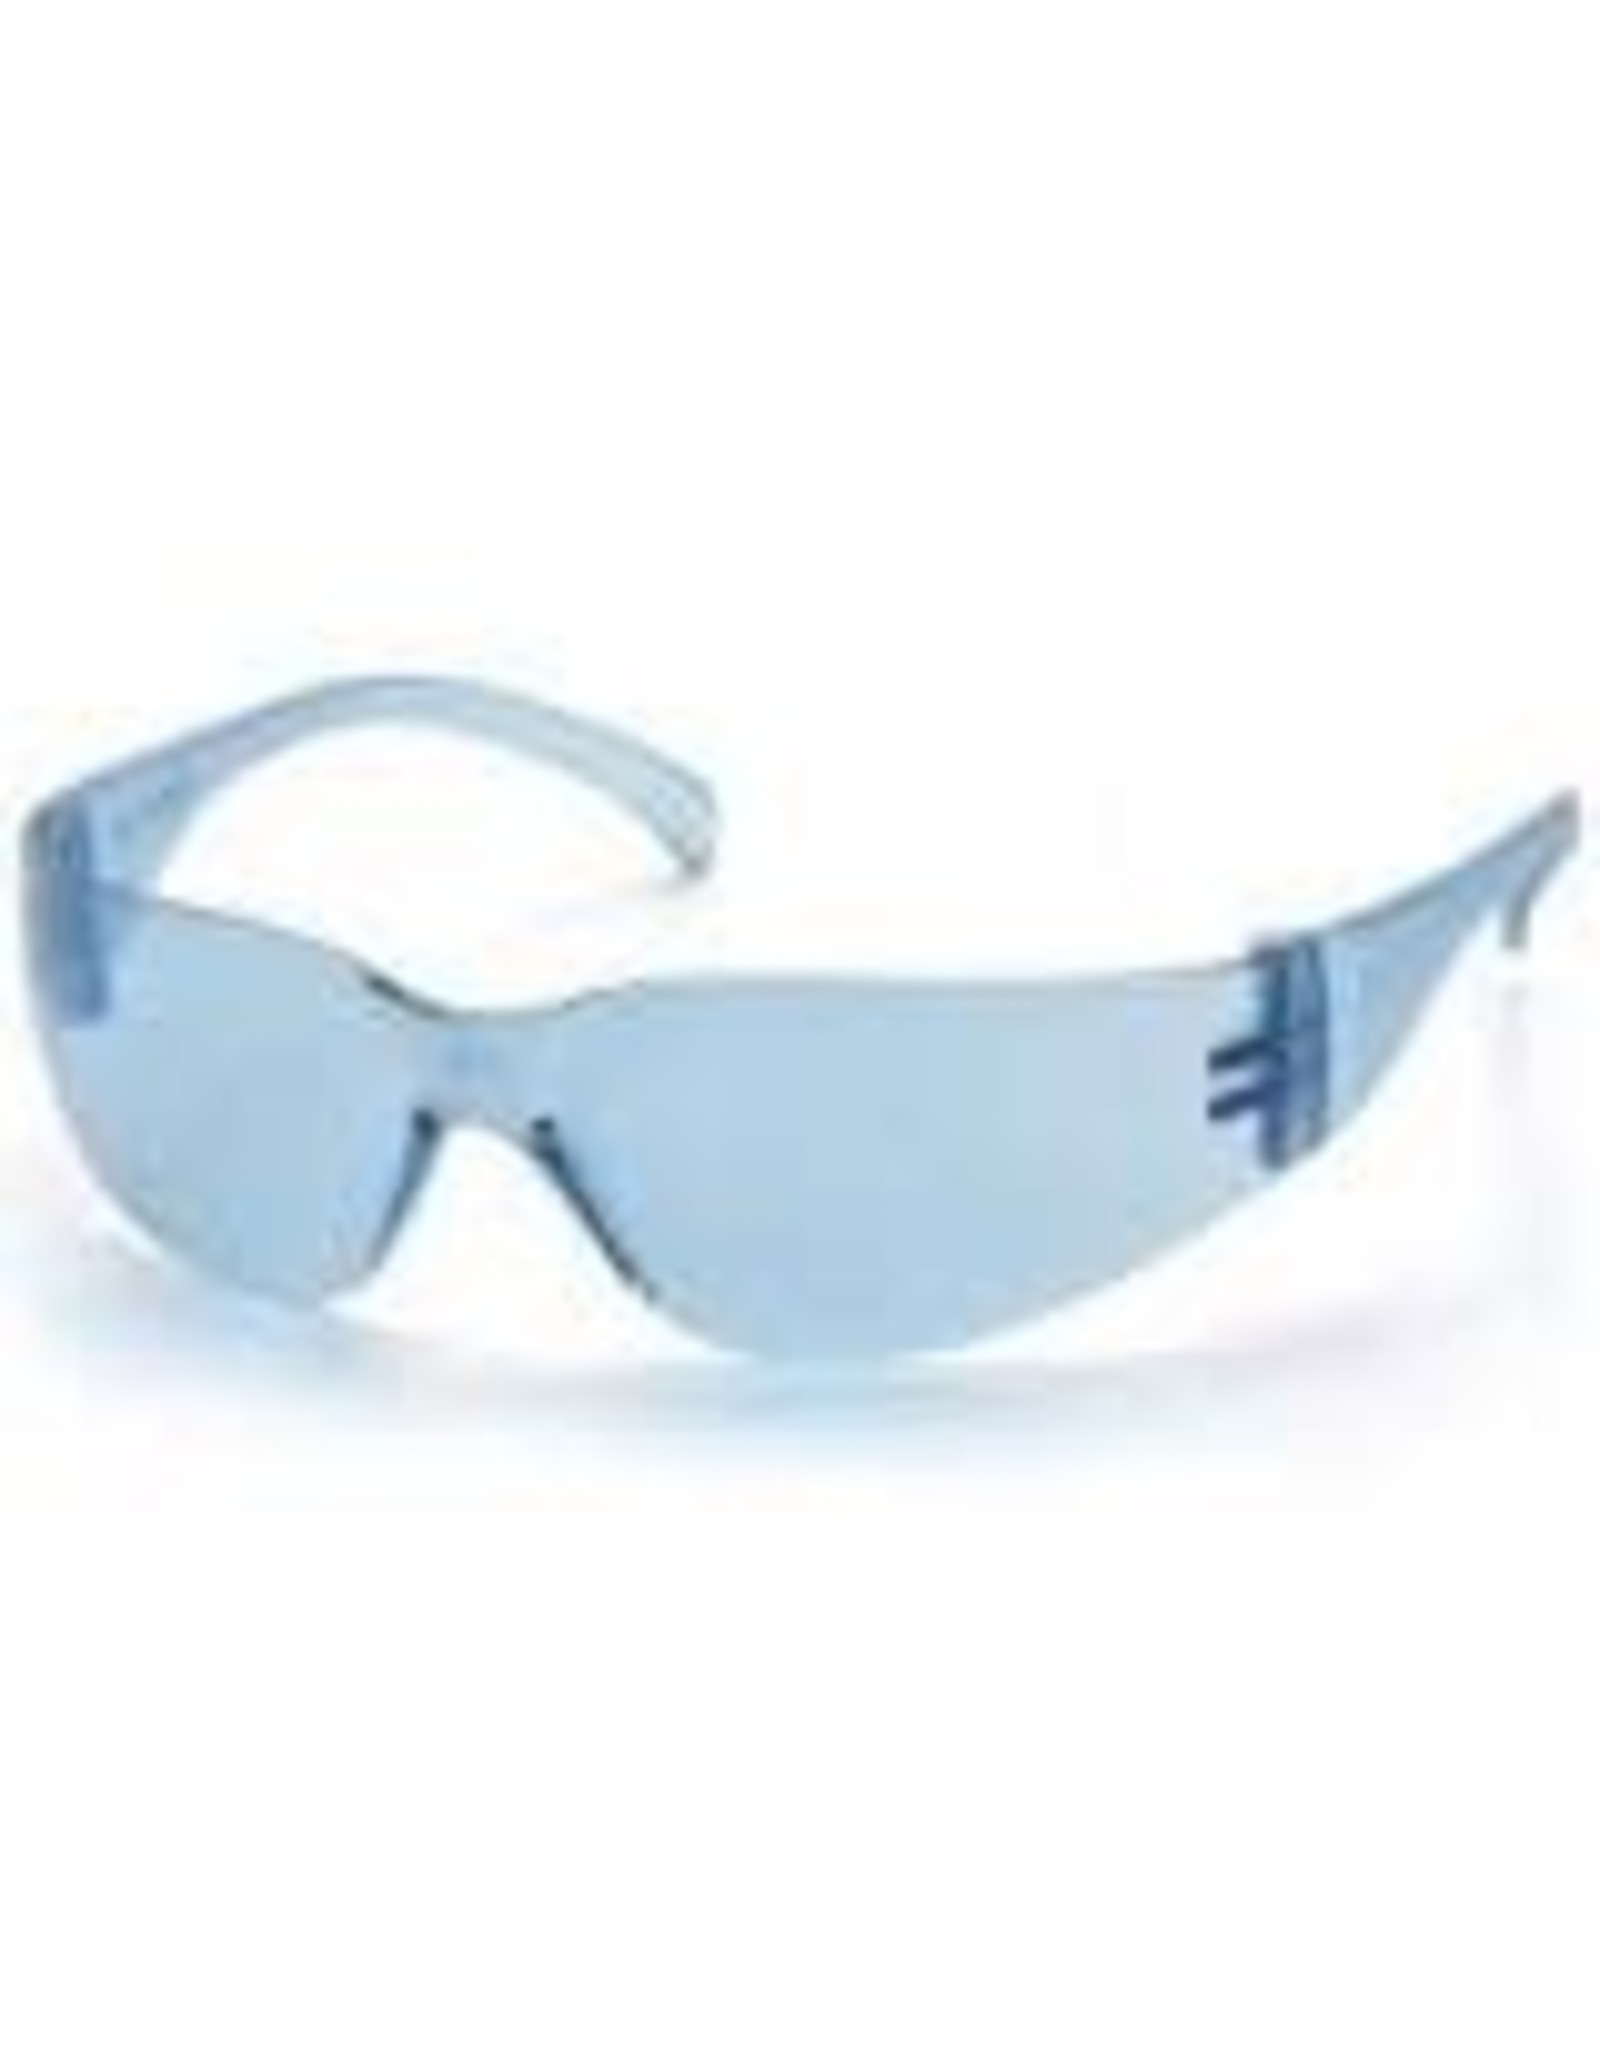 Pyramex Intruder Safety Glasses - Infintity Blue Lens